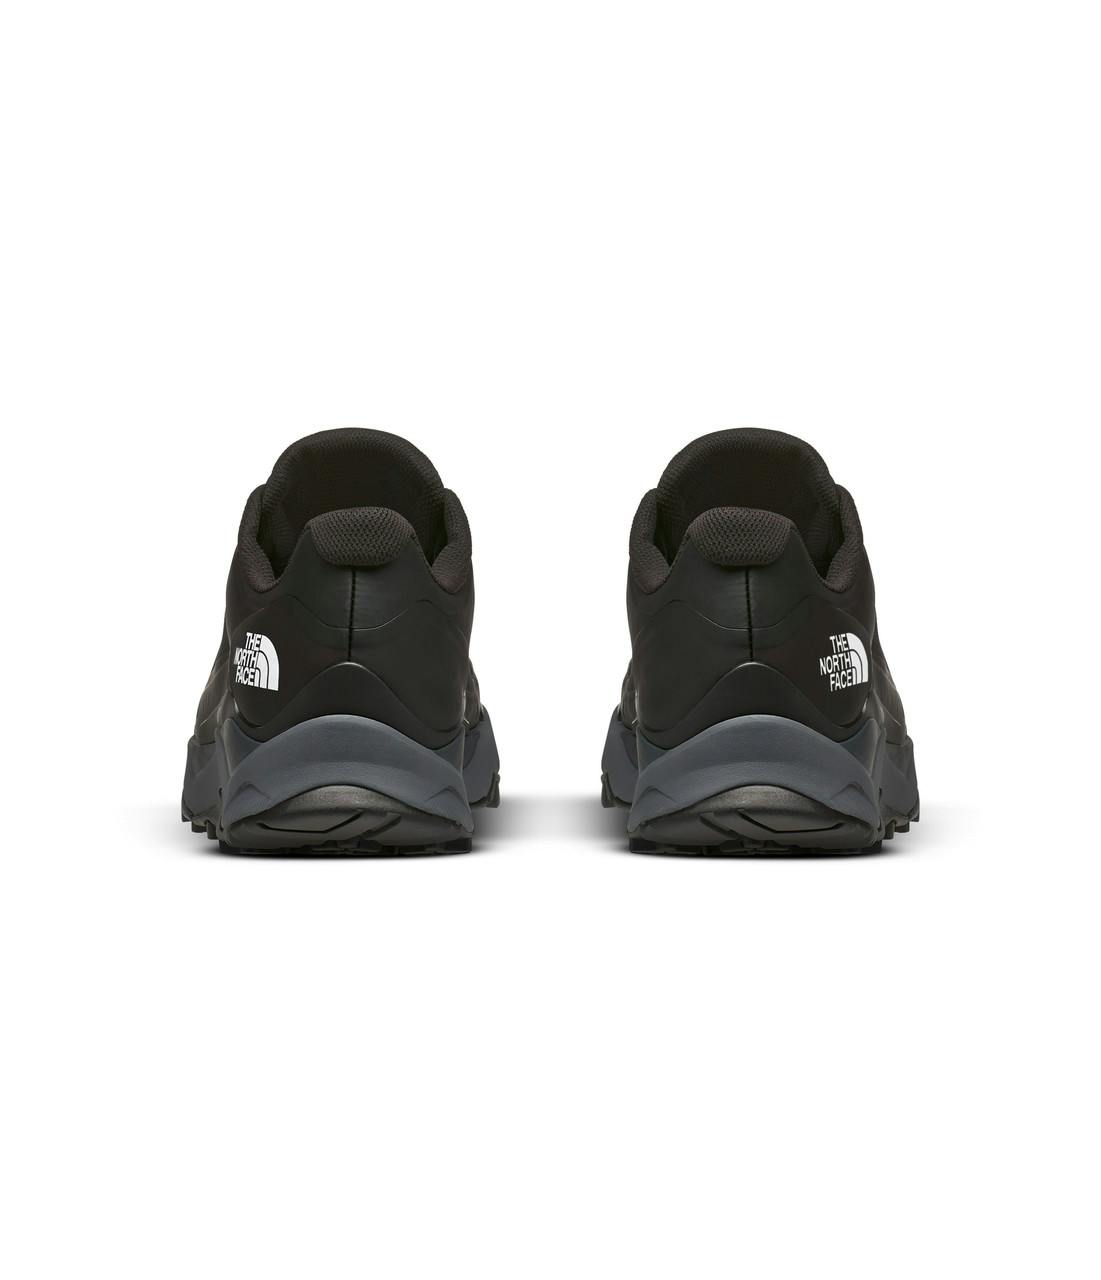 Chaussures de rando Vectiv Exploris FUTURELIGHT Noir TNF/Gris zinc